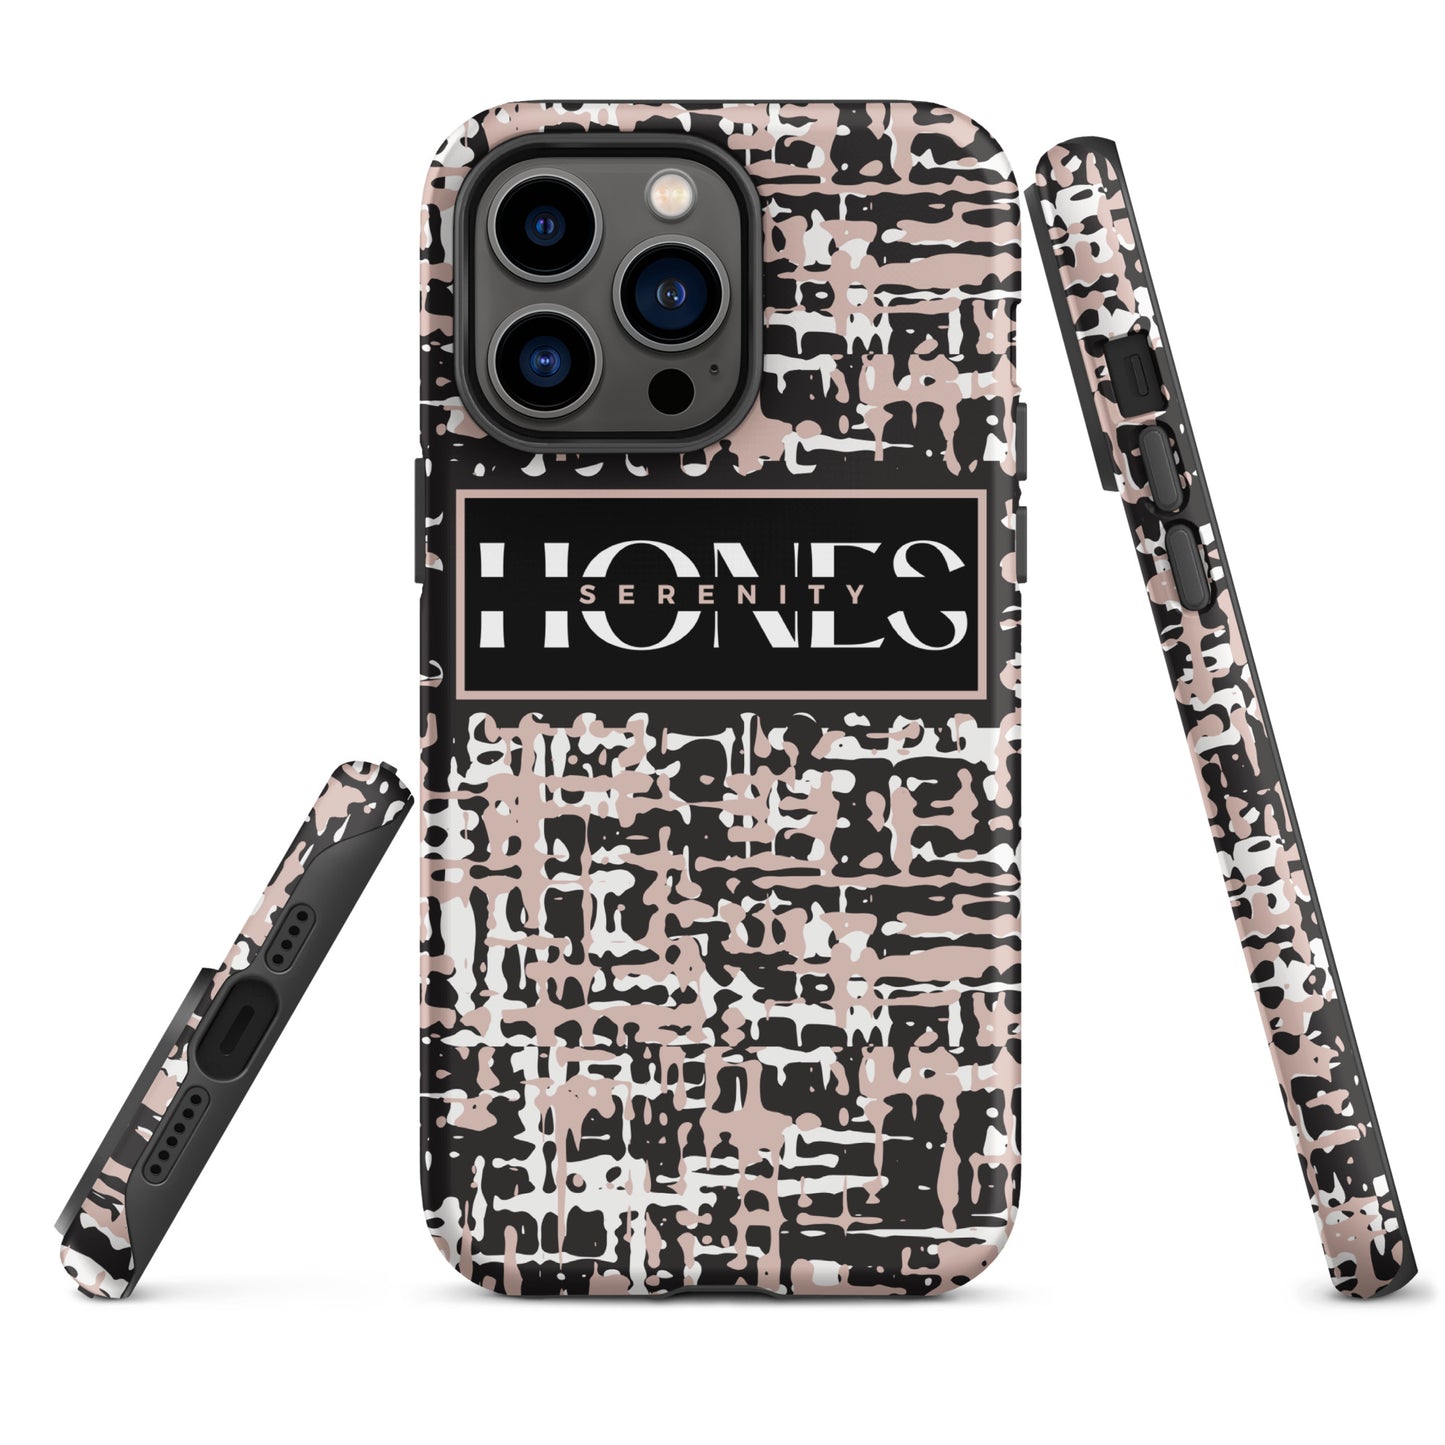 Hones Serenity Hard iPhone® Case